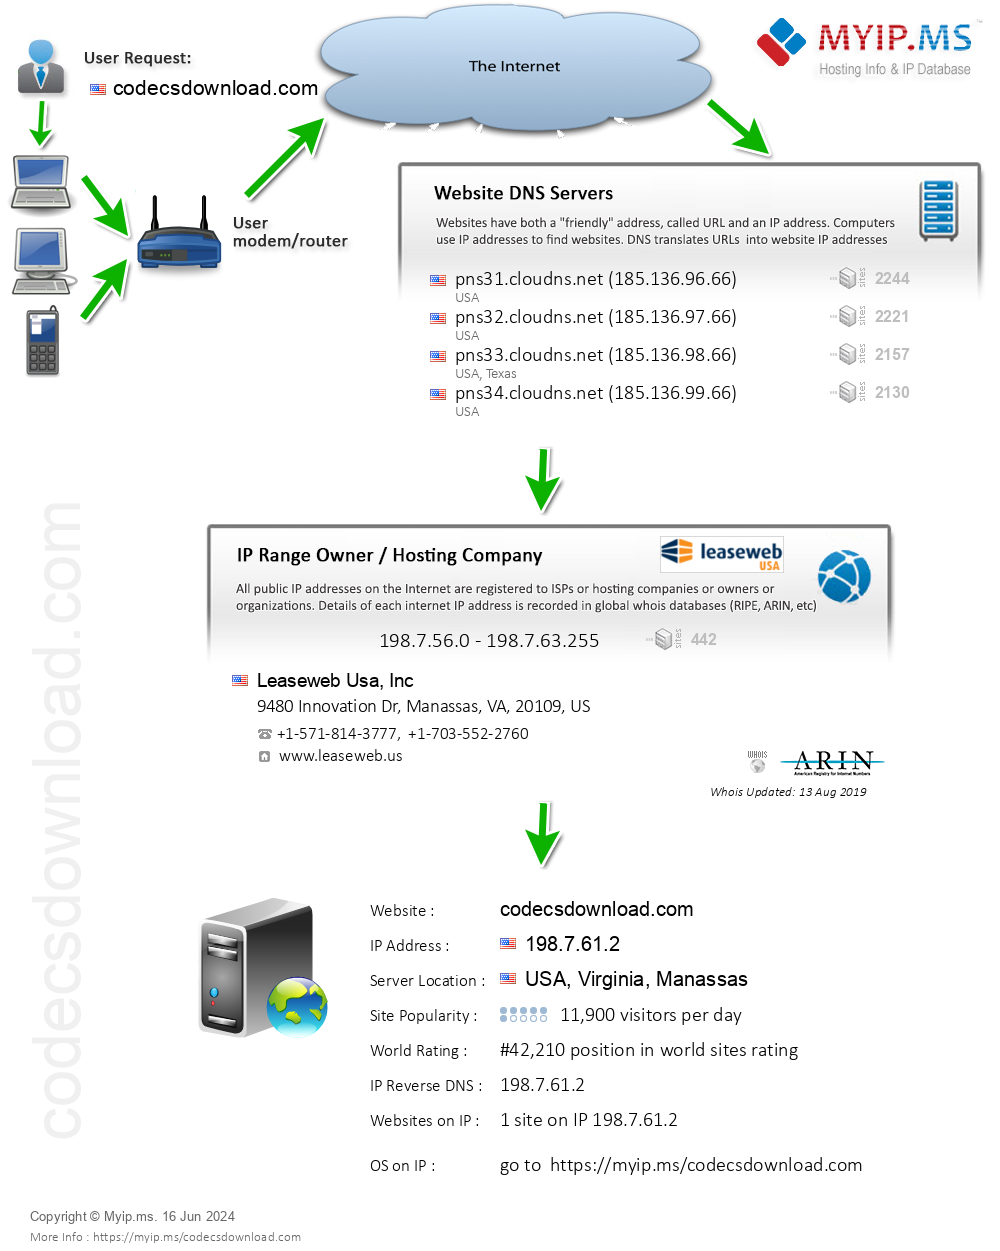 Codecsdownload.com - Website Hosting Visual IP Diagram